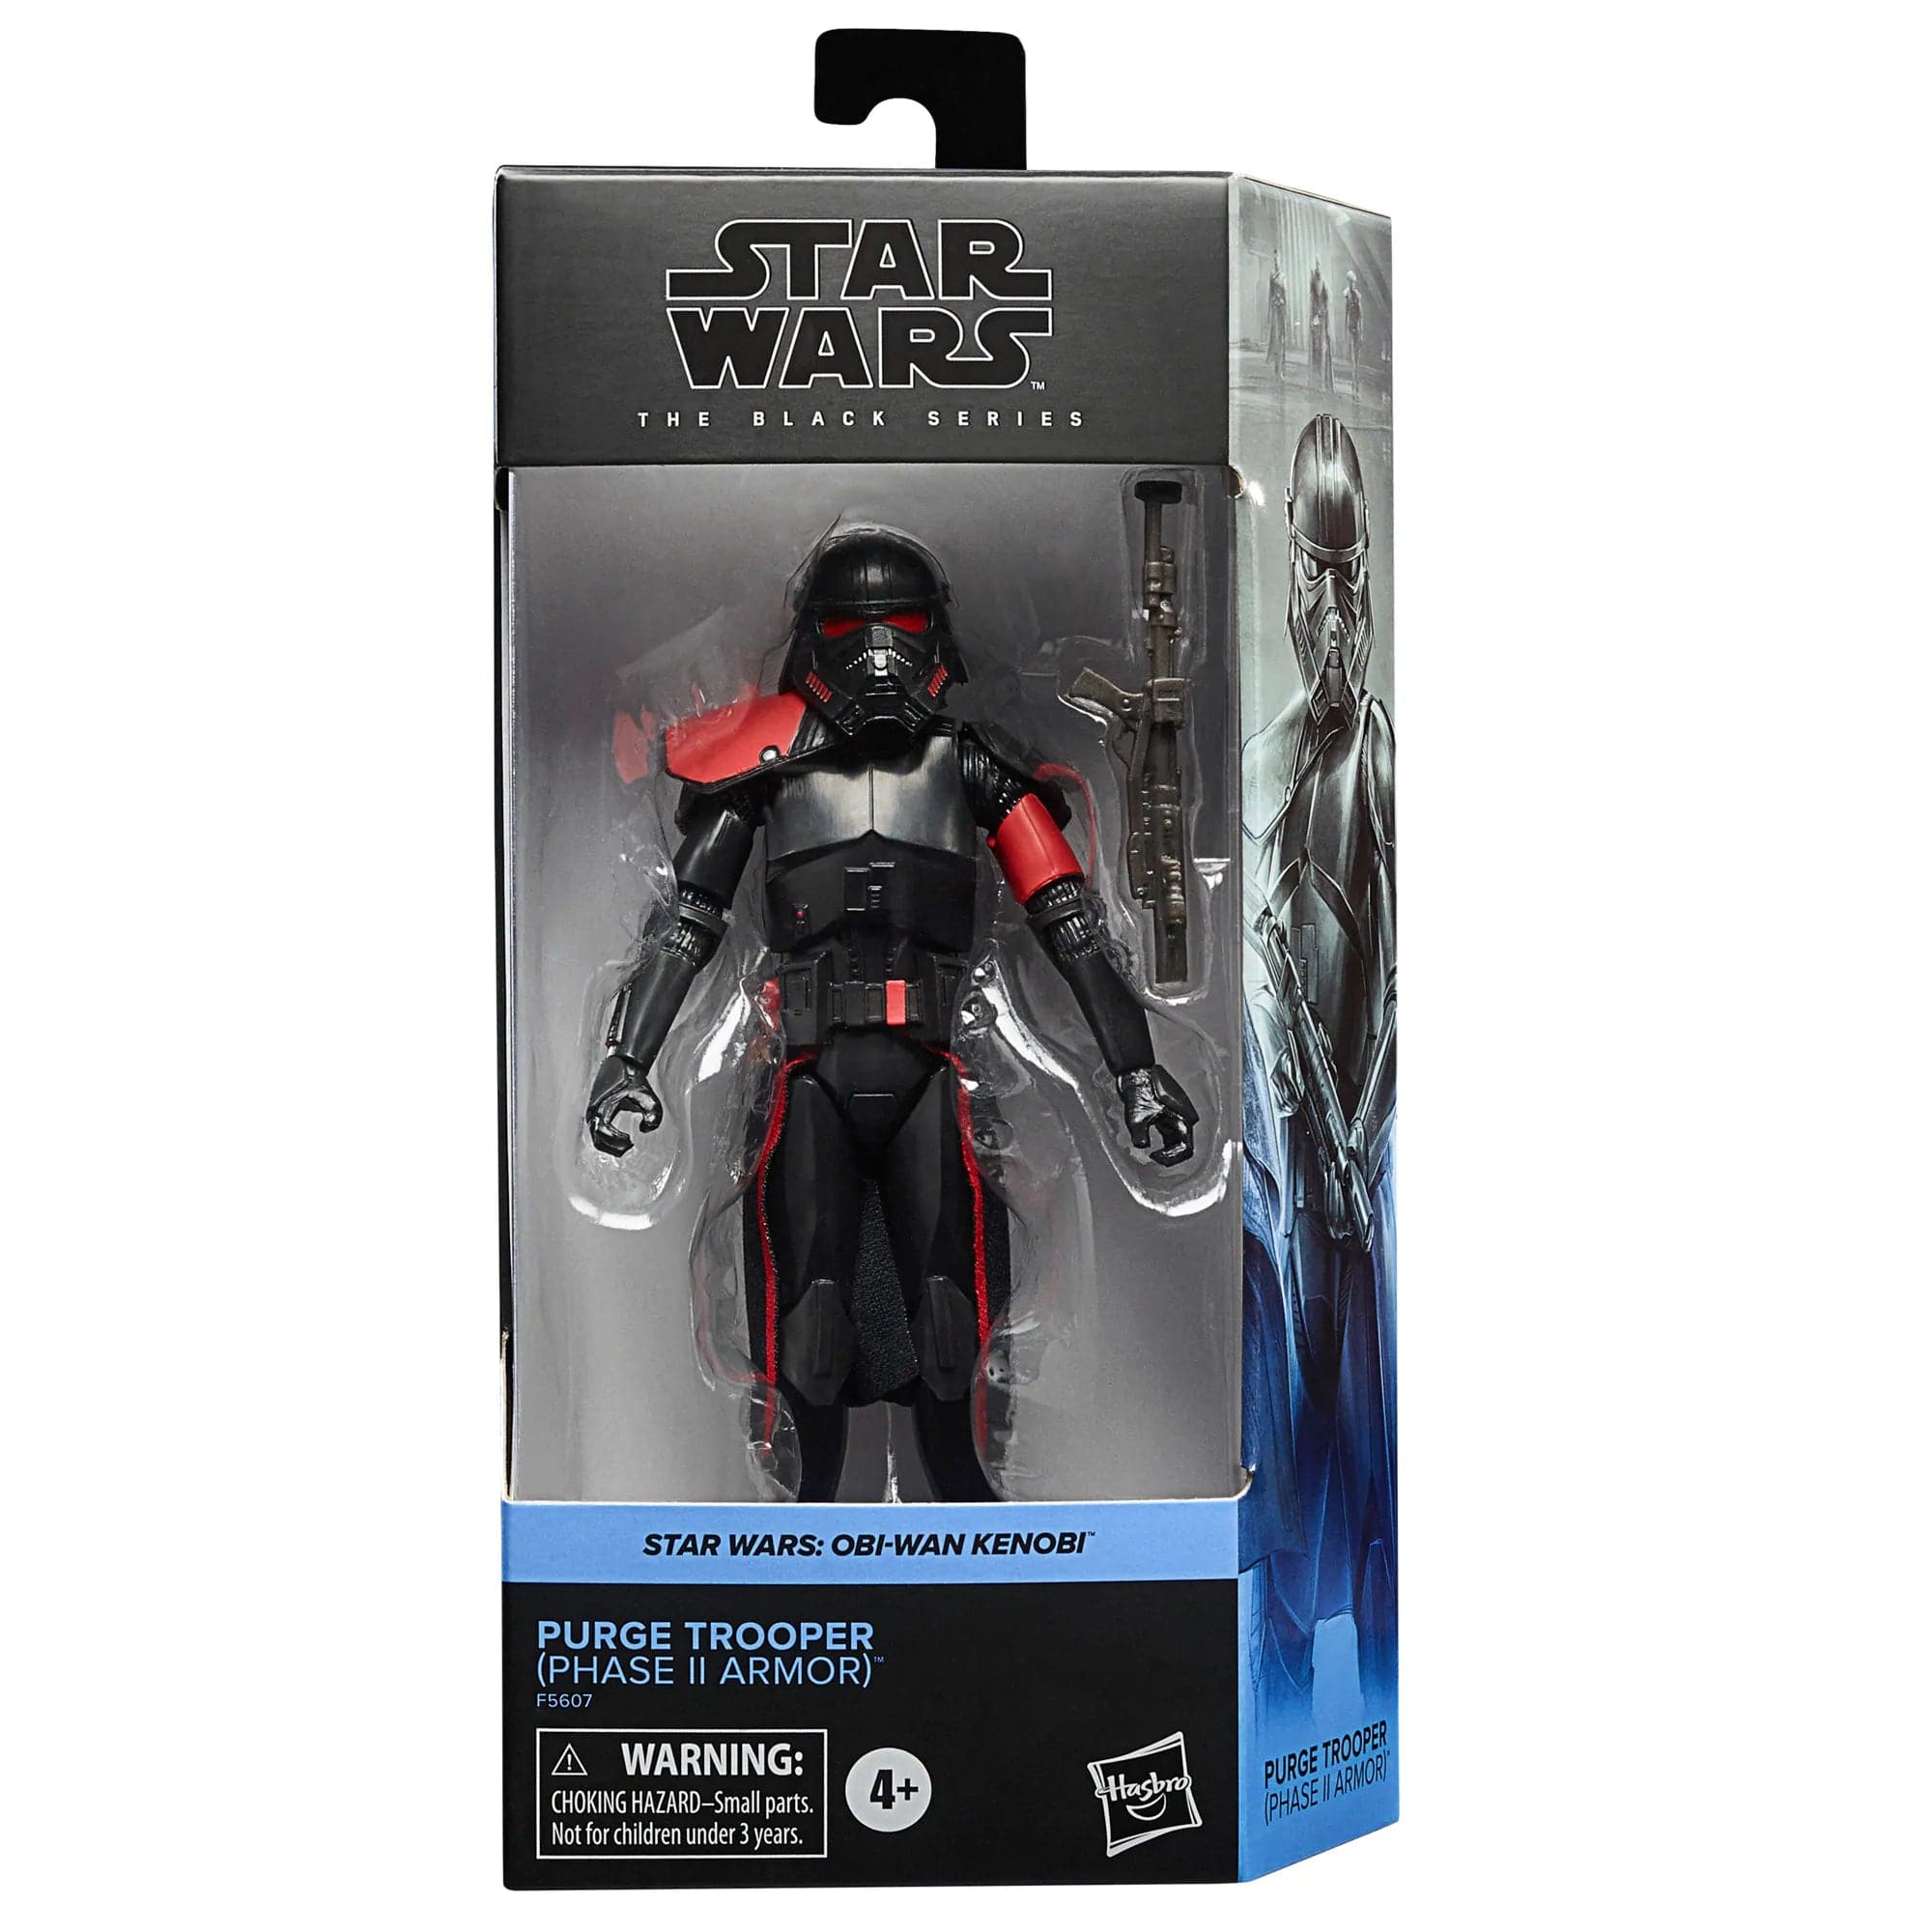 Star Wars The Black Series Purge Trooper (Phase II Armor) Box